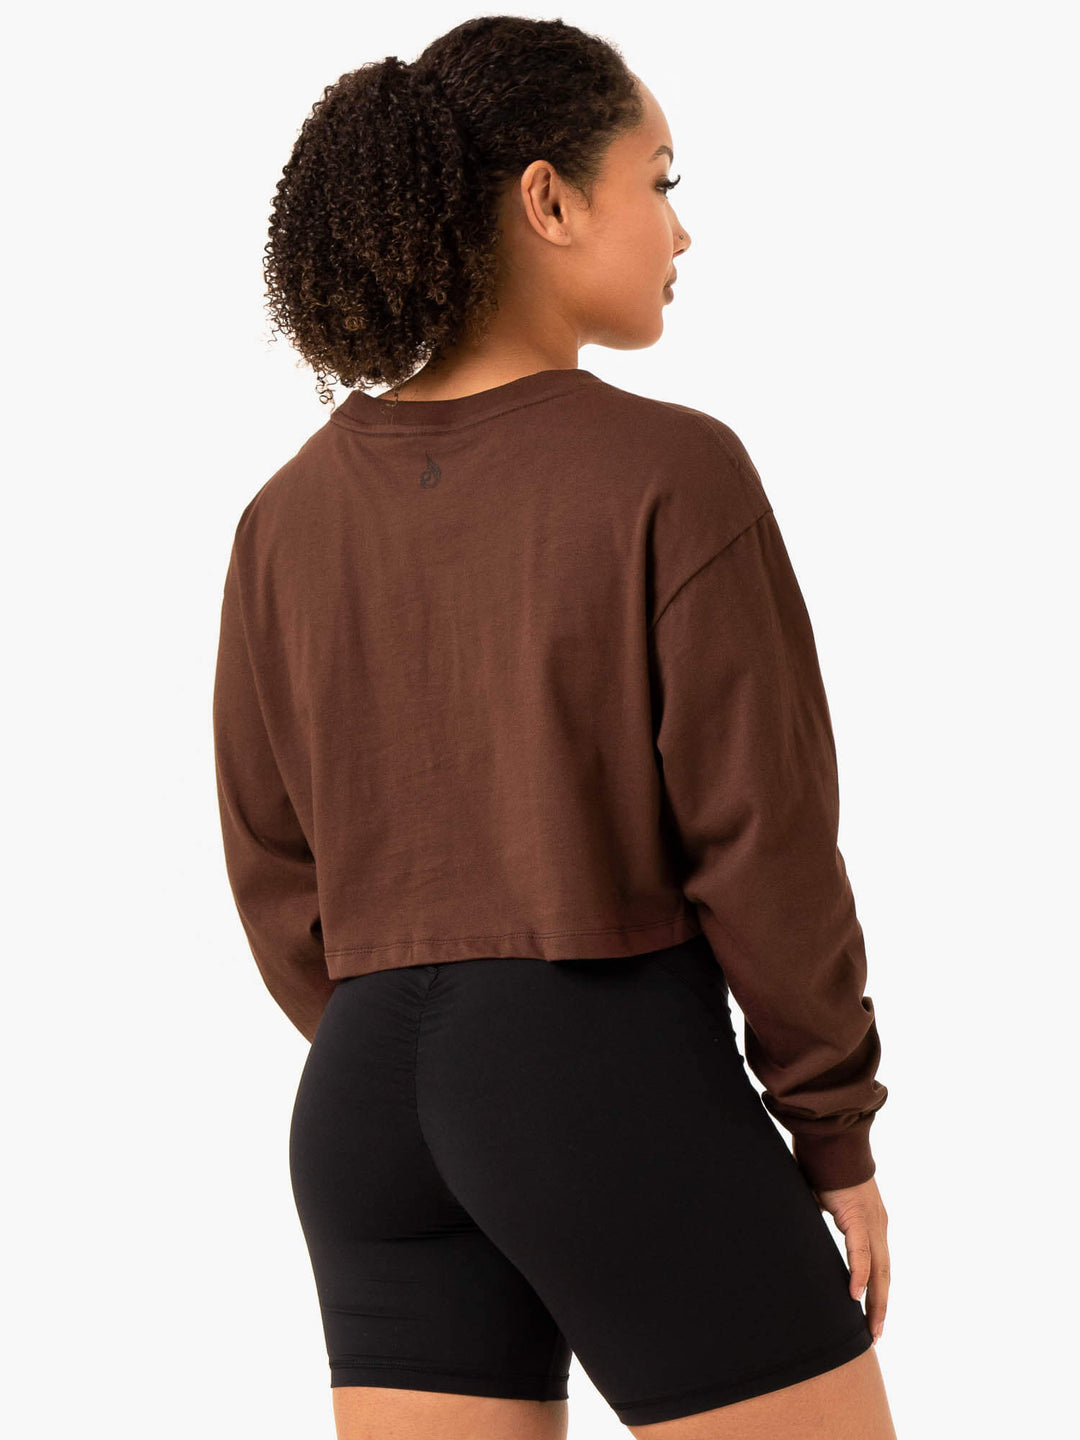 Level Up Long Sleeve T-Shirt - Chocolate Clothing Ryderwear 